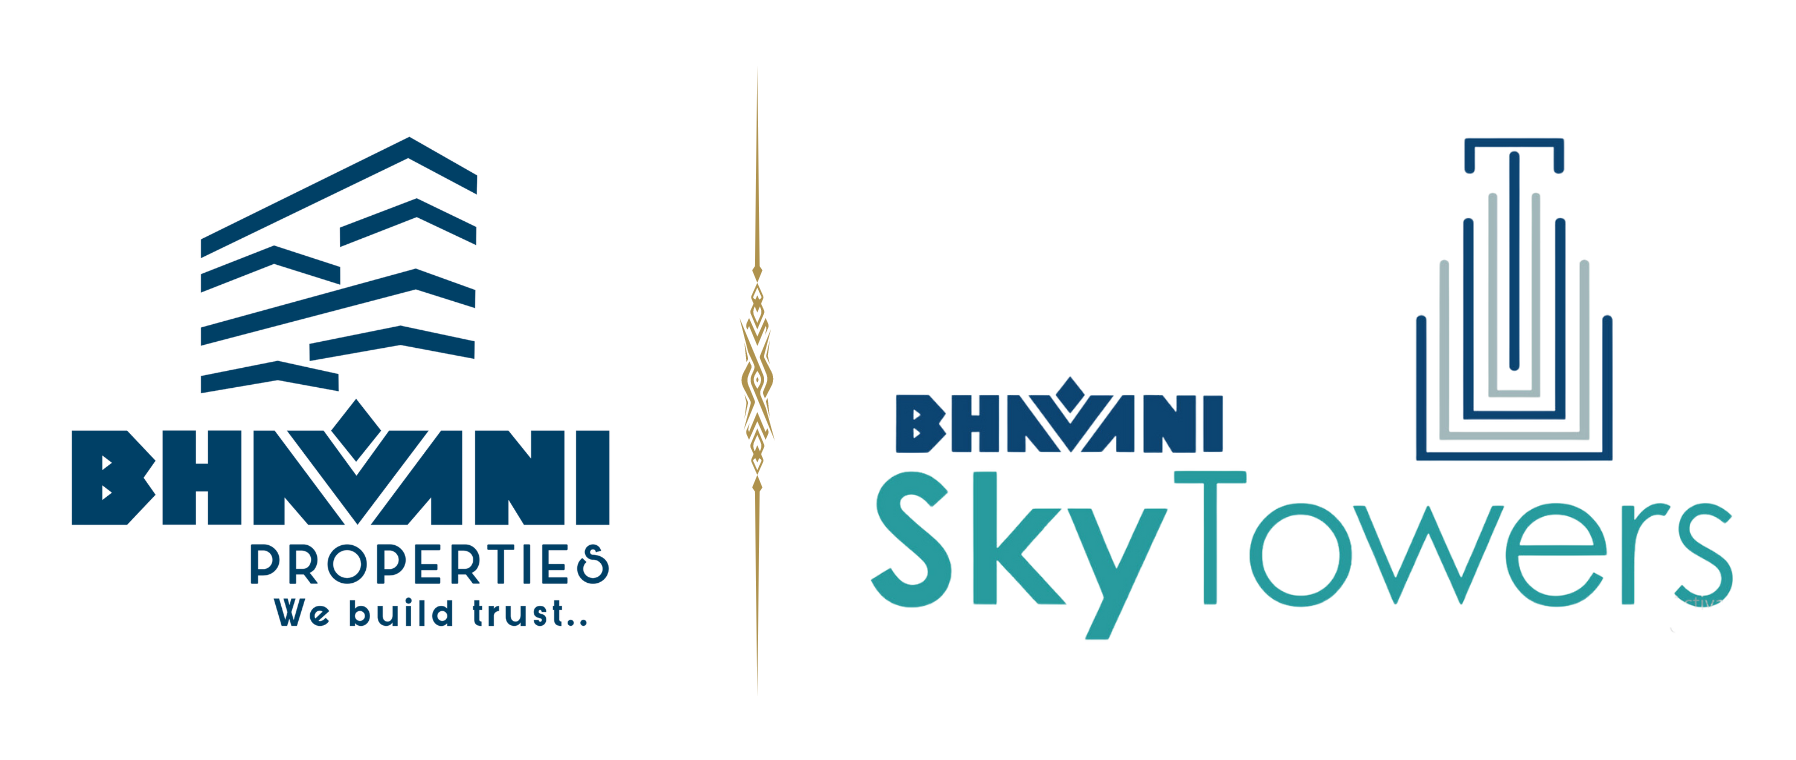 a blue color logo showcasing the brand bhavani sky towers